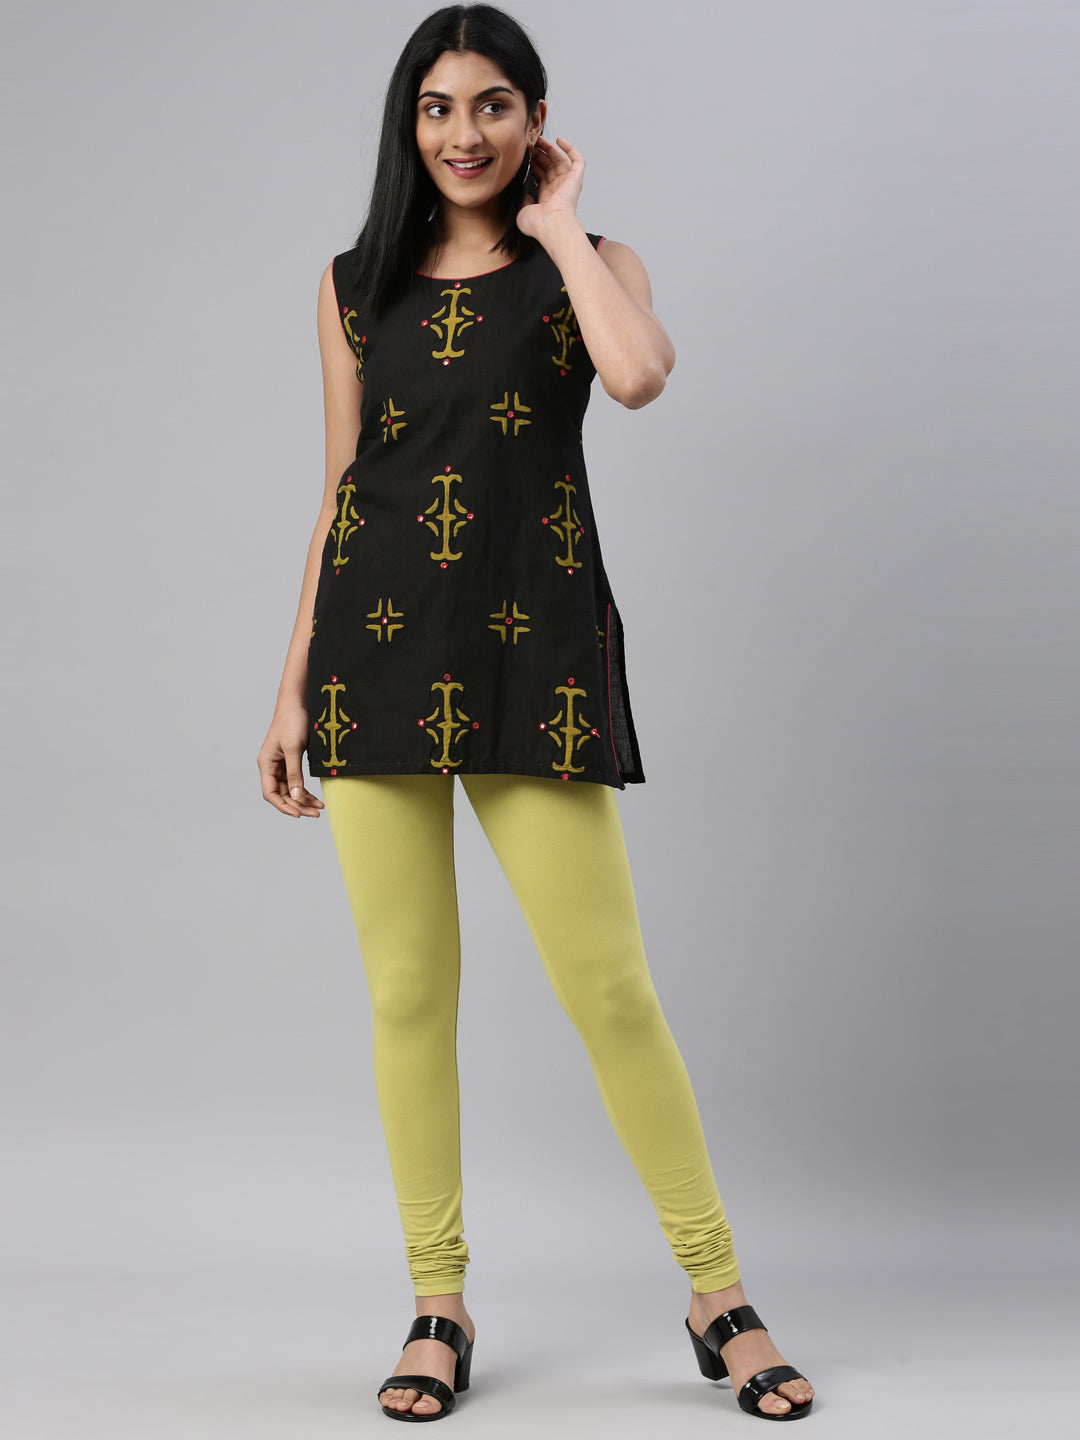 Buy Yellow Leggings for Women by LYRA Online | Ajio.com